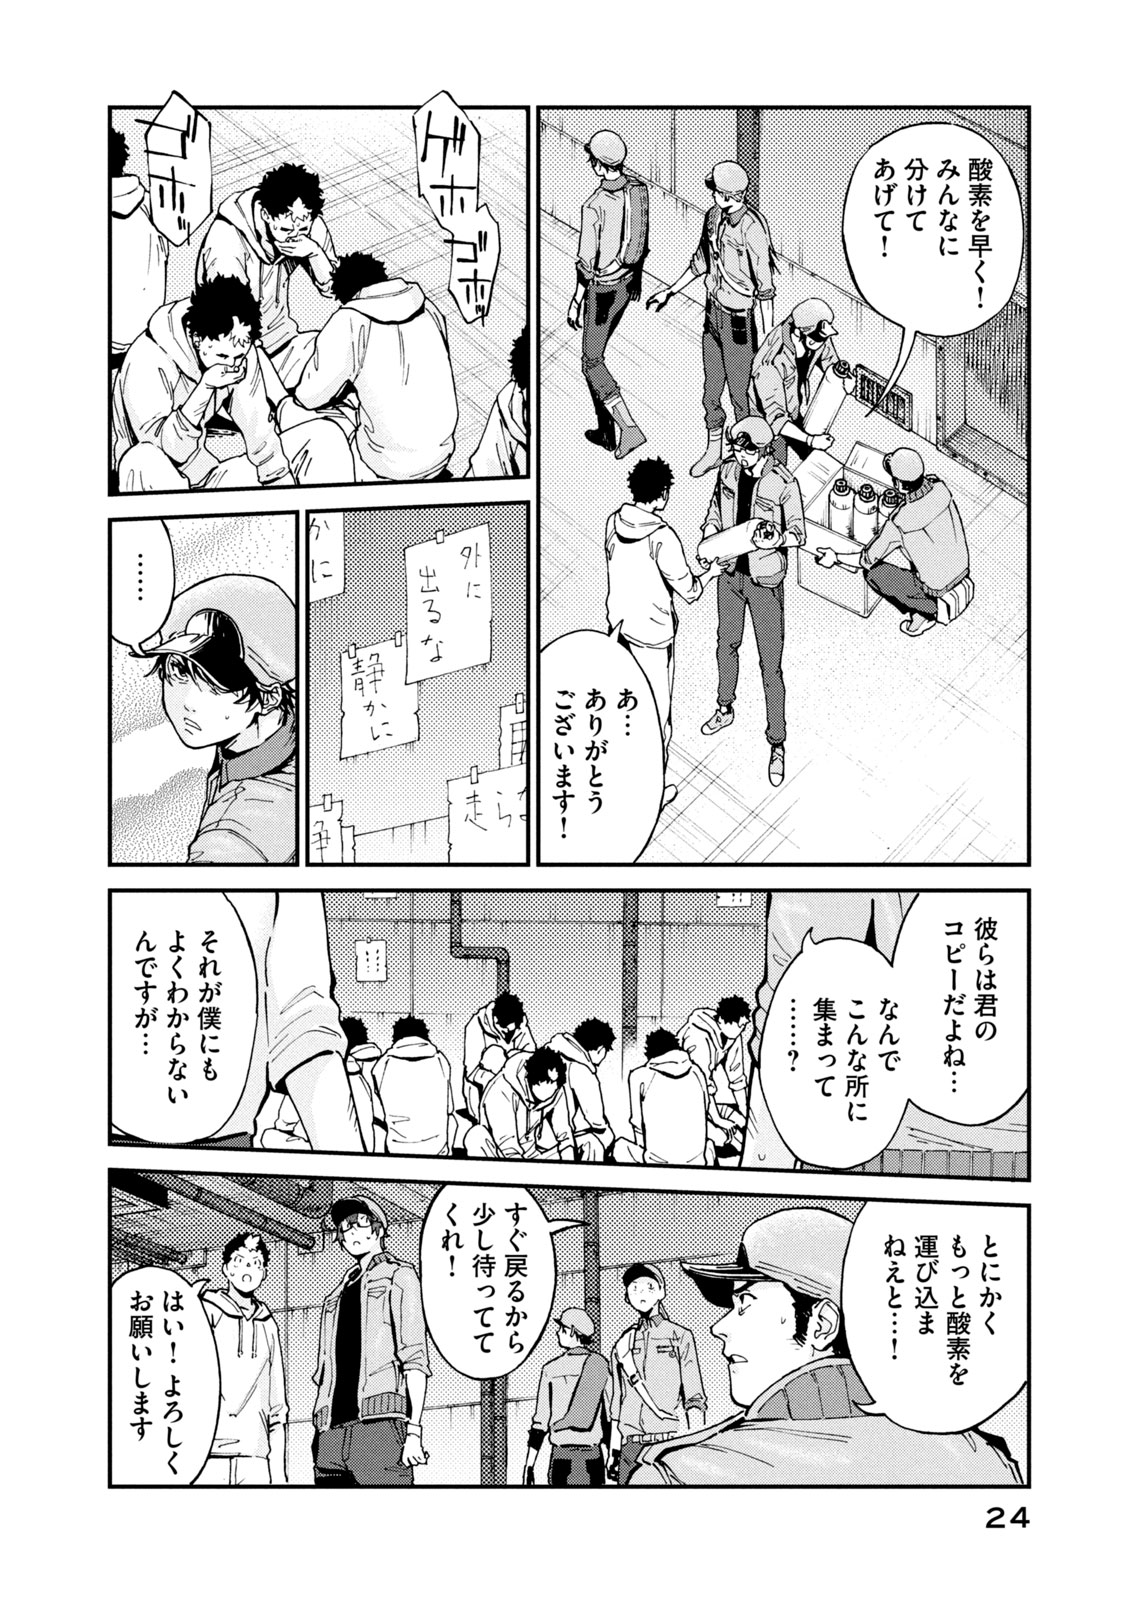 Hataraku Saibou BLACK - Chapter 37 - Page 26